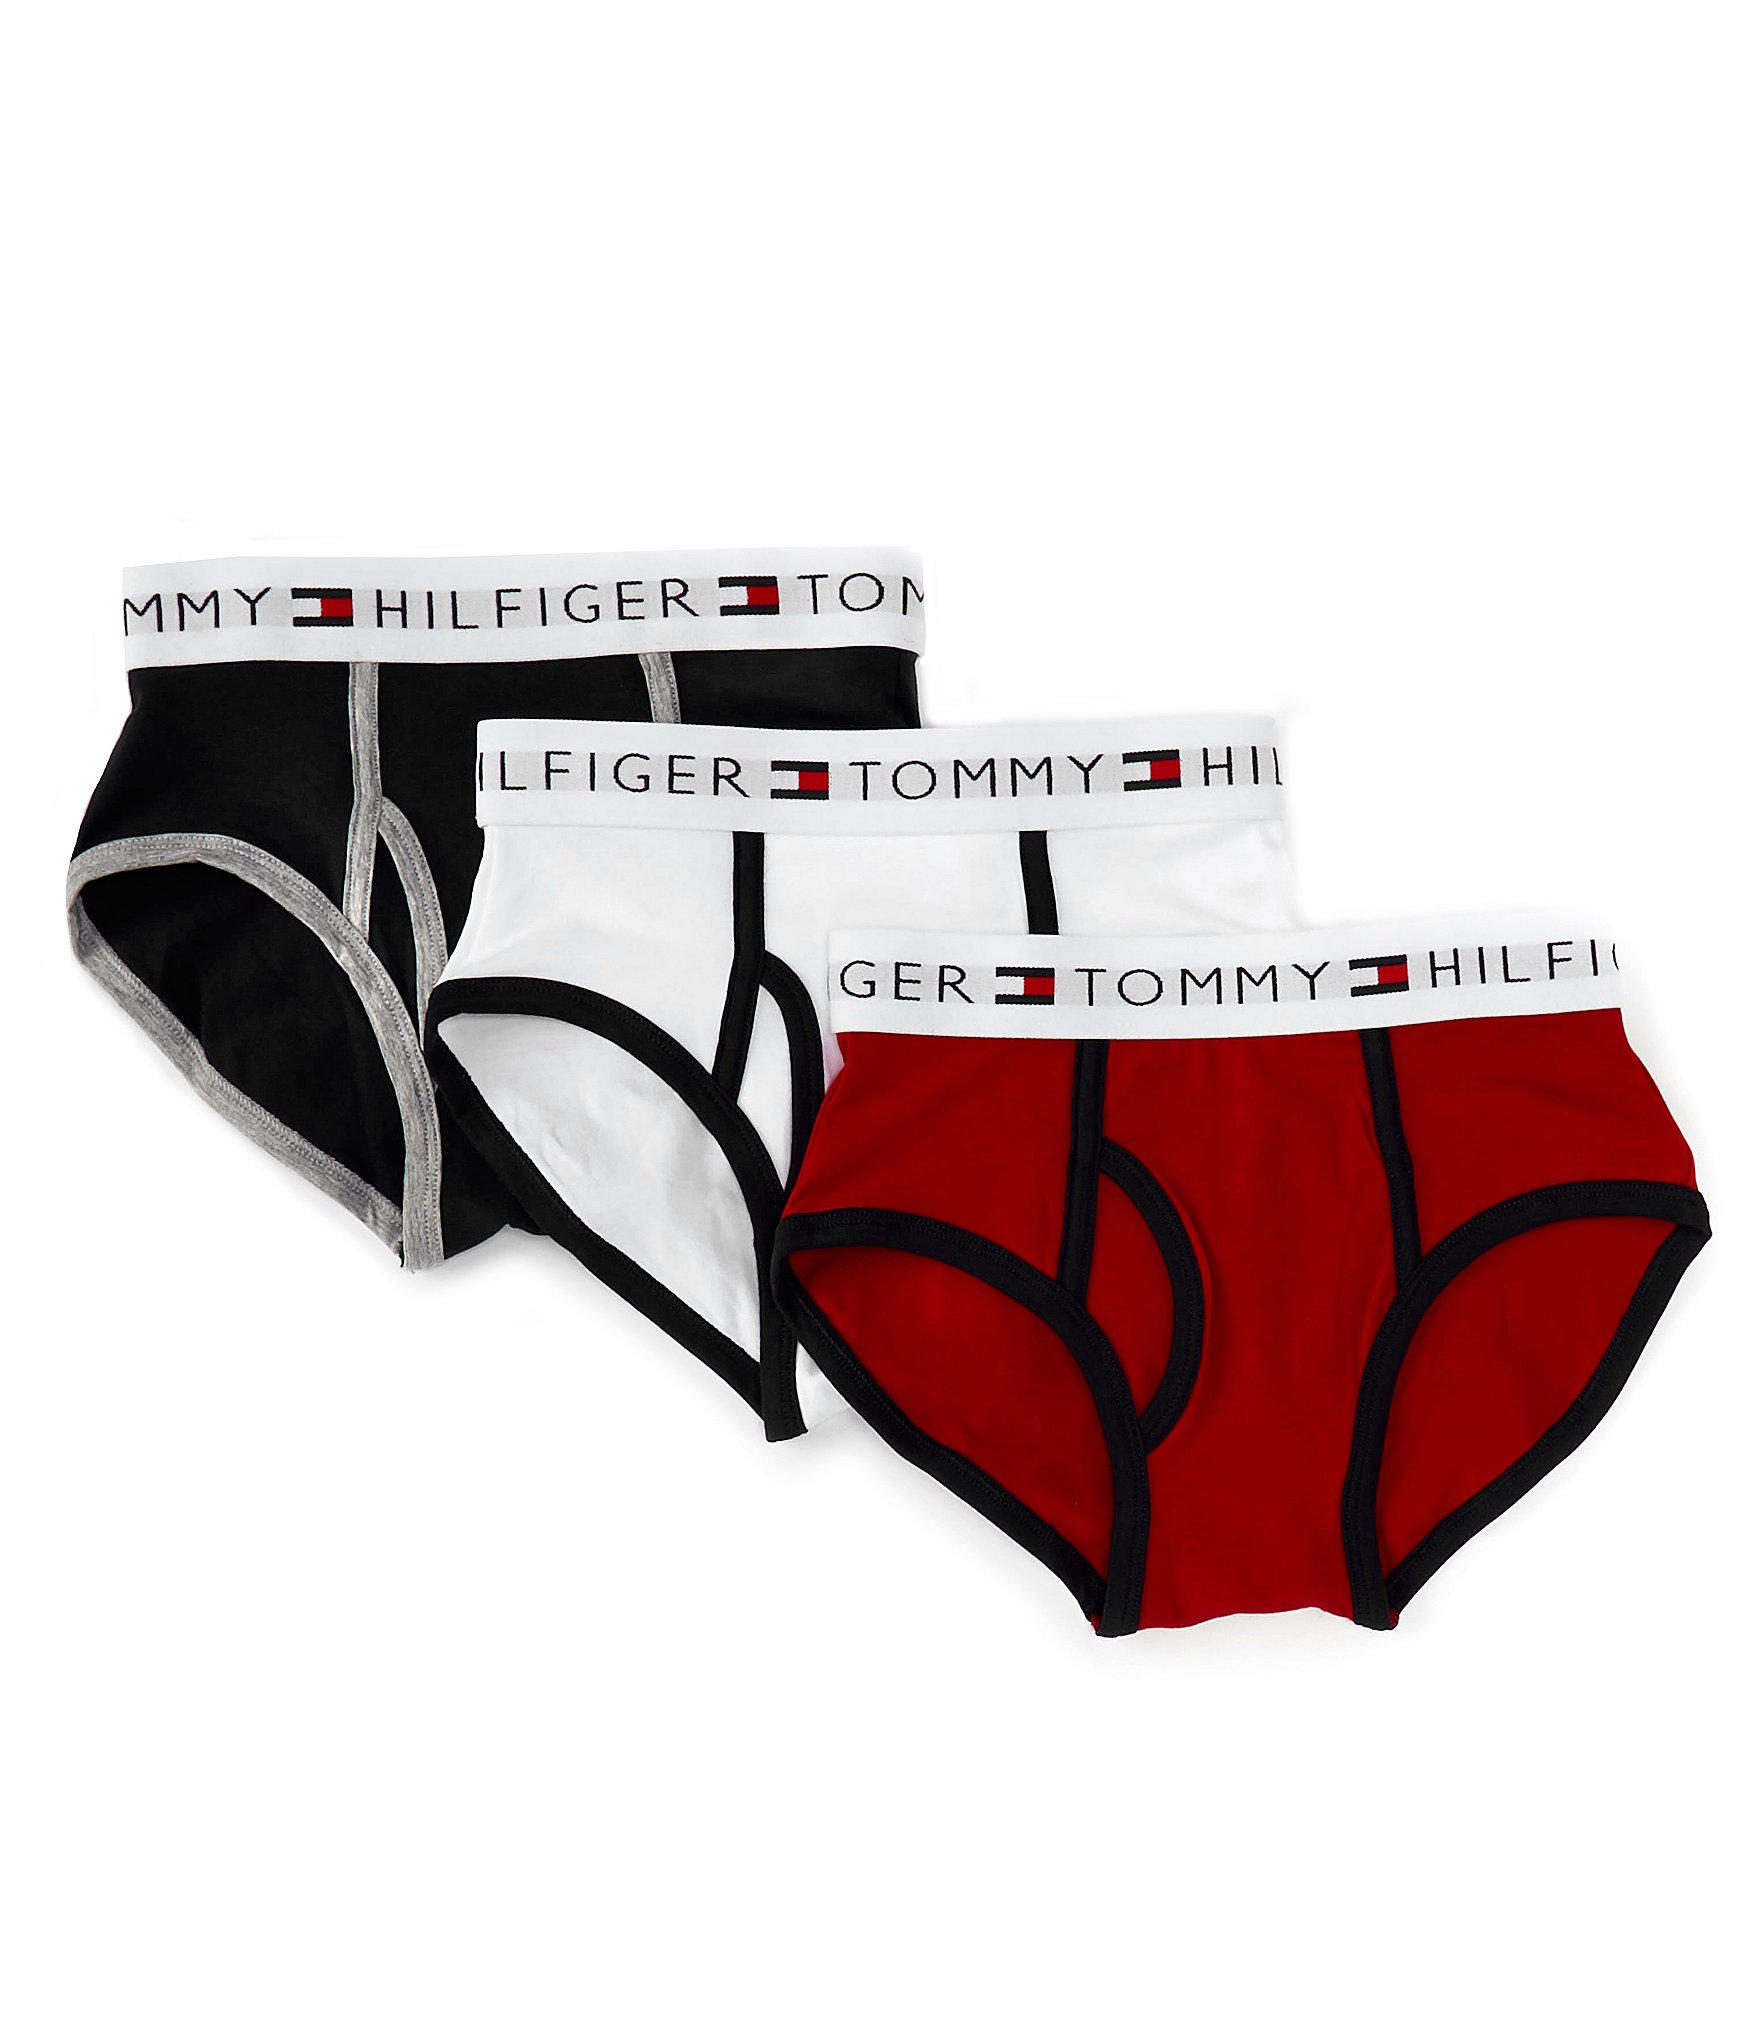 Tommy Hilfiger Boys' Underwear